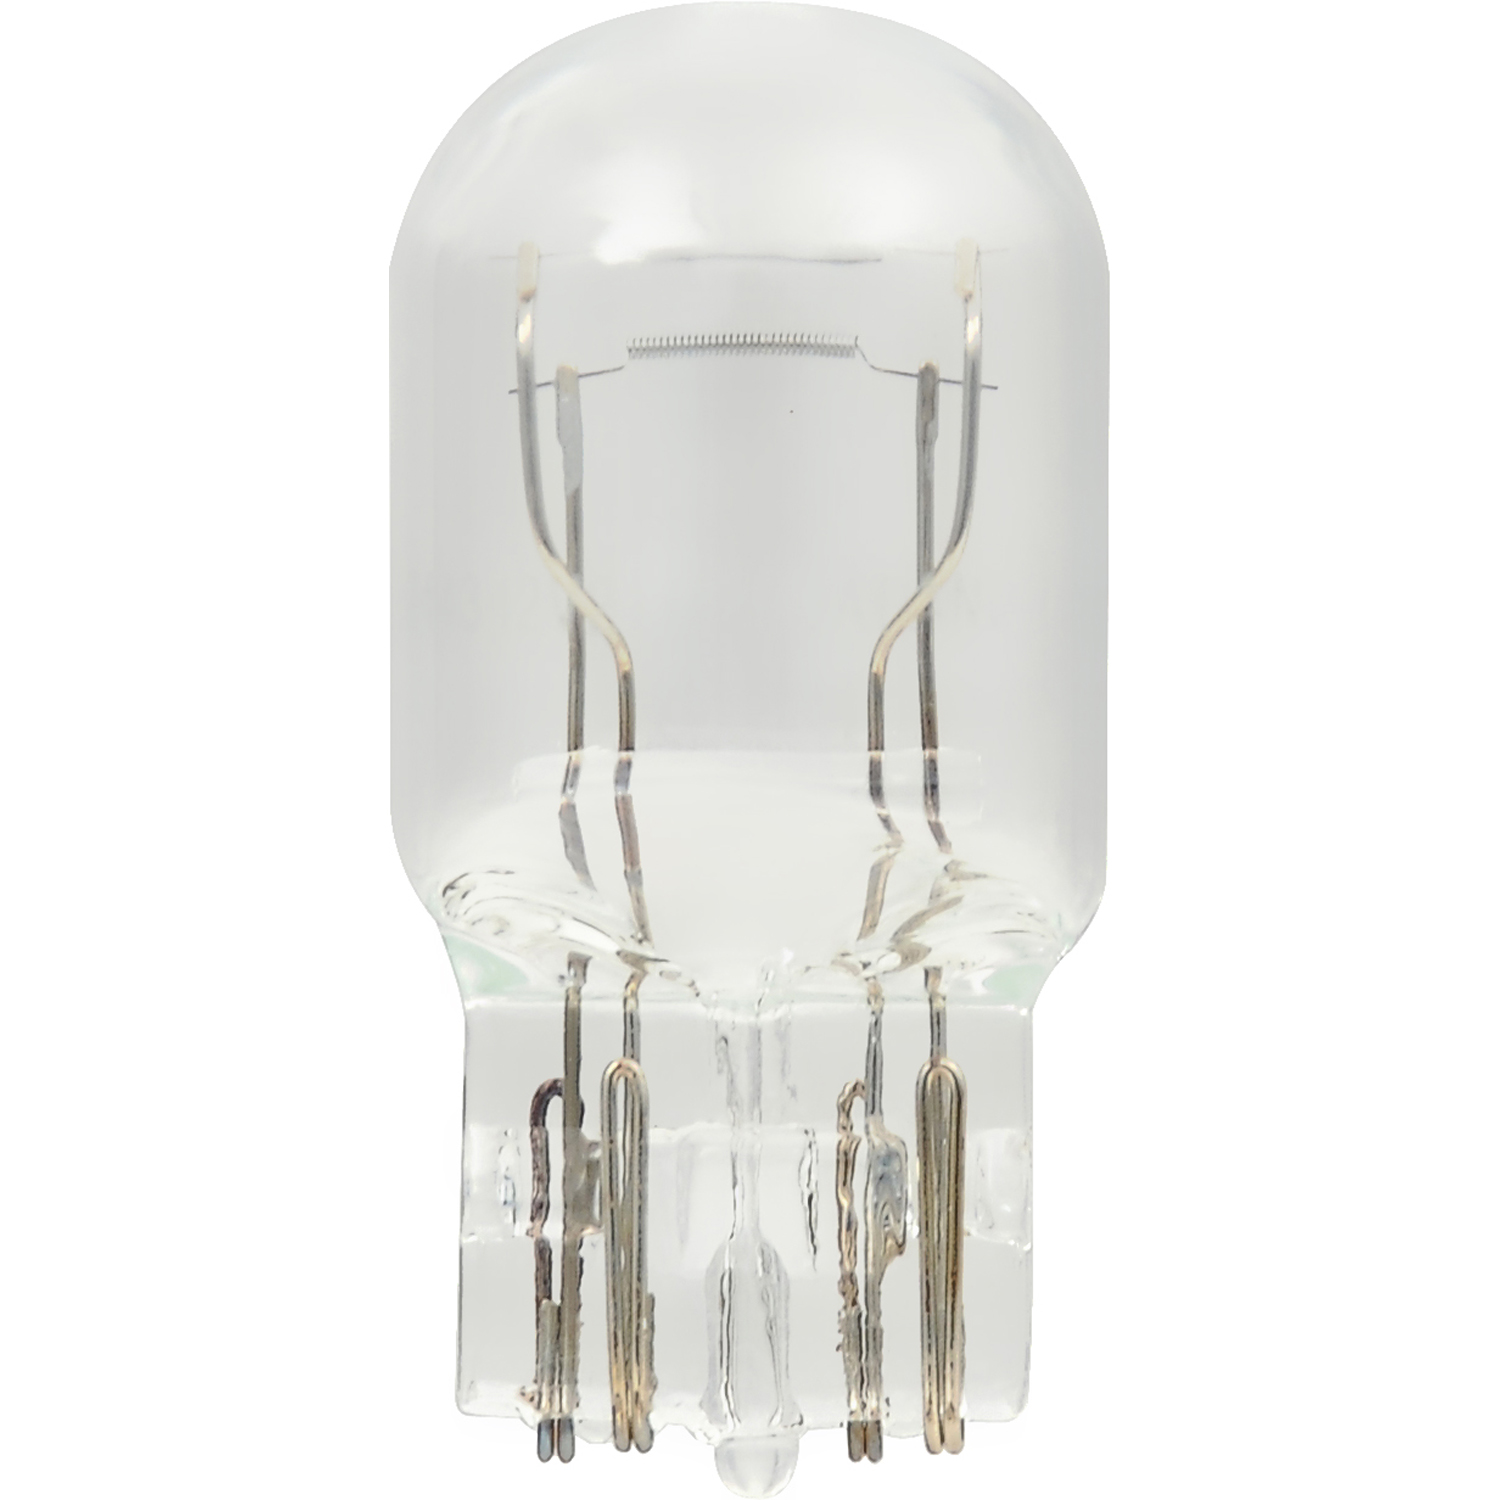 SYLVANIA RETAIL PACKS - 10-Pack Box Turn Signal Light Bulb (Rear) - SYR 7443.TP